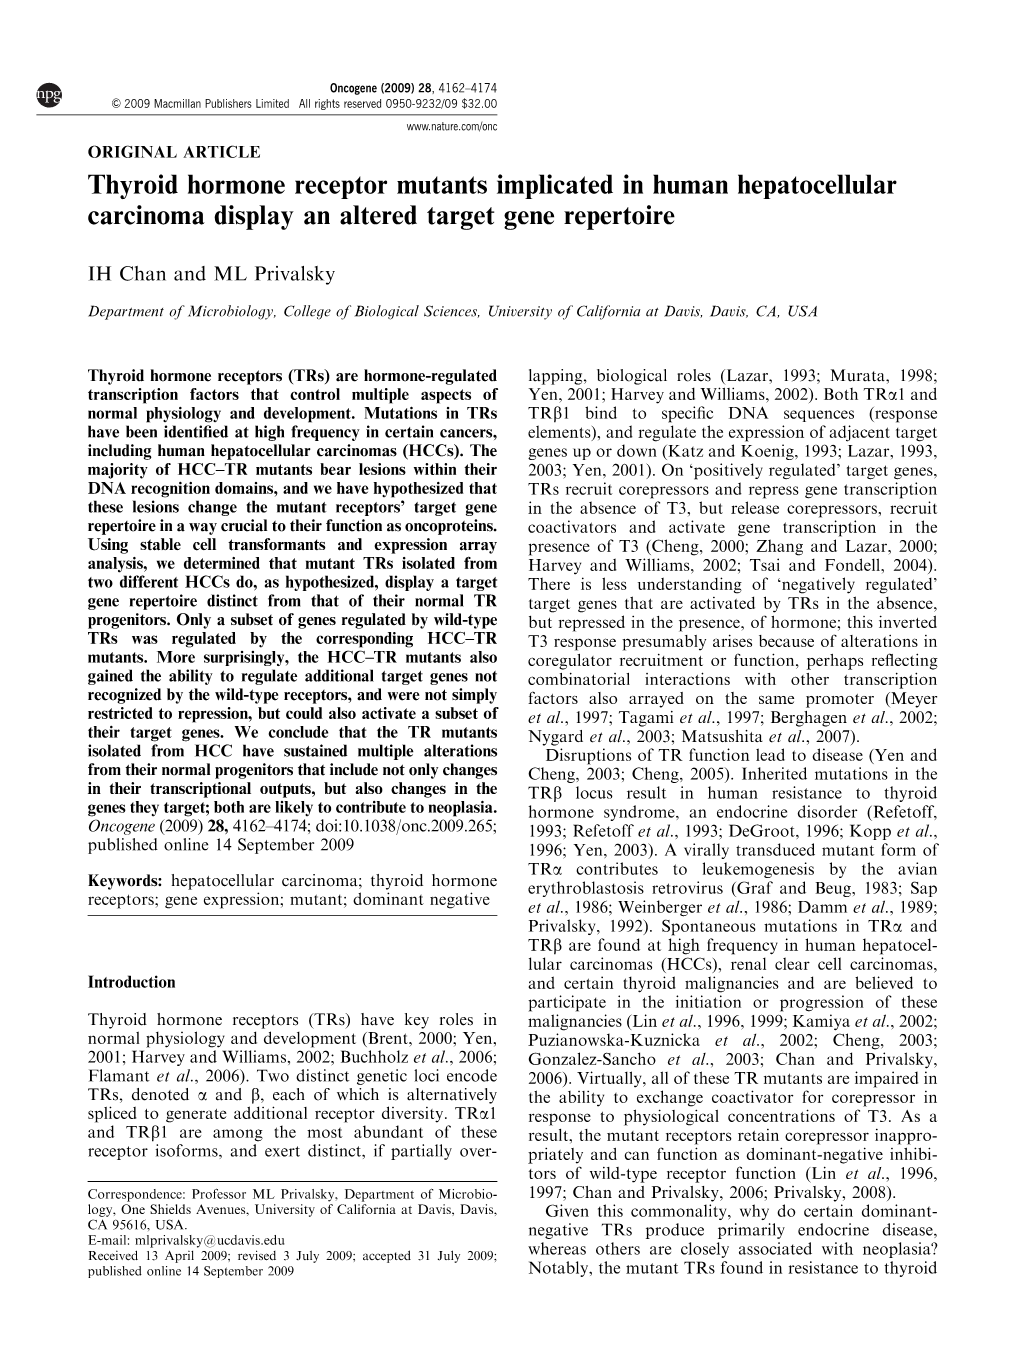 Thyroid Hormone Receptor Mutants Implicated in Human Hepatocellular Carcinoma Display an Altered Target Gene Repertoire